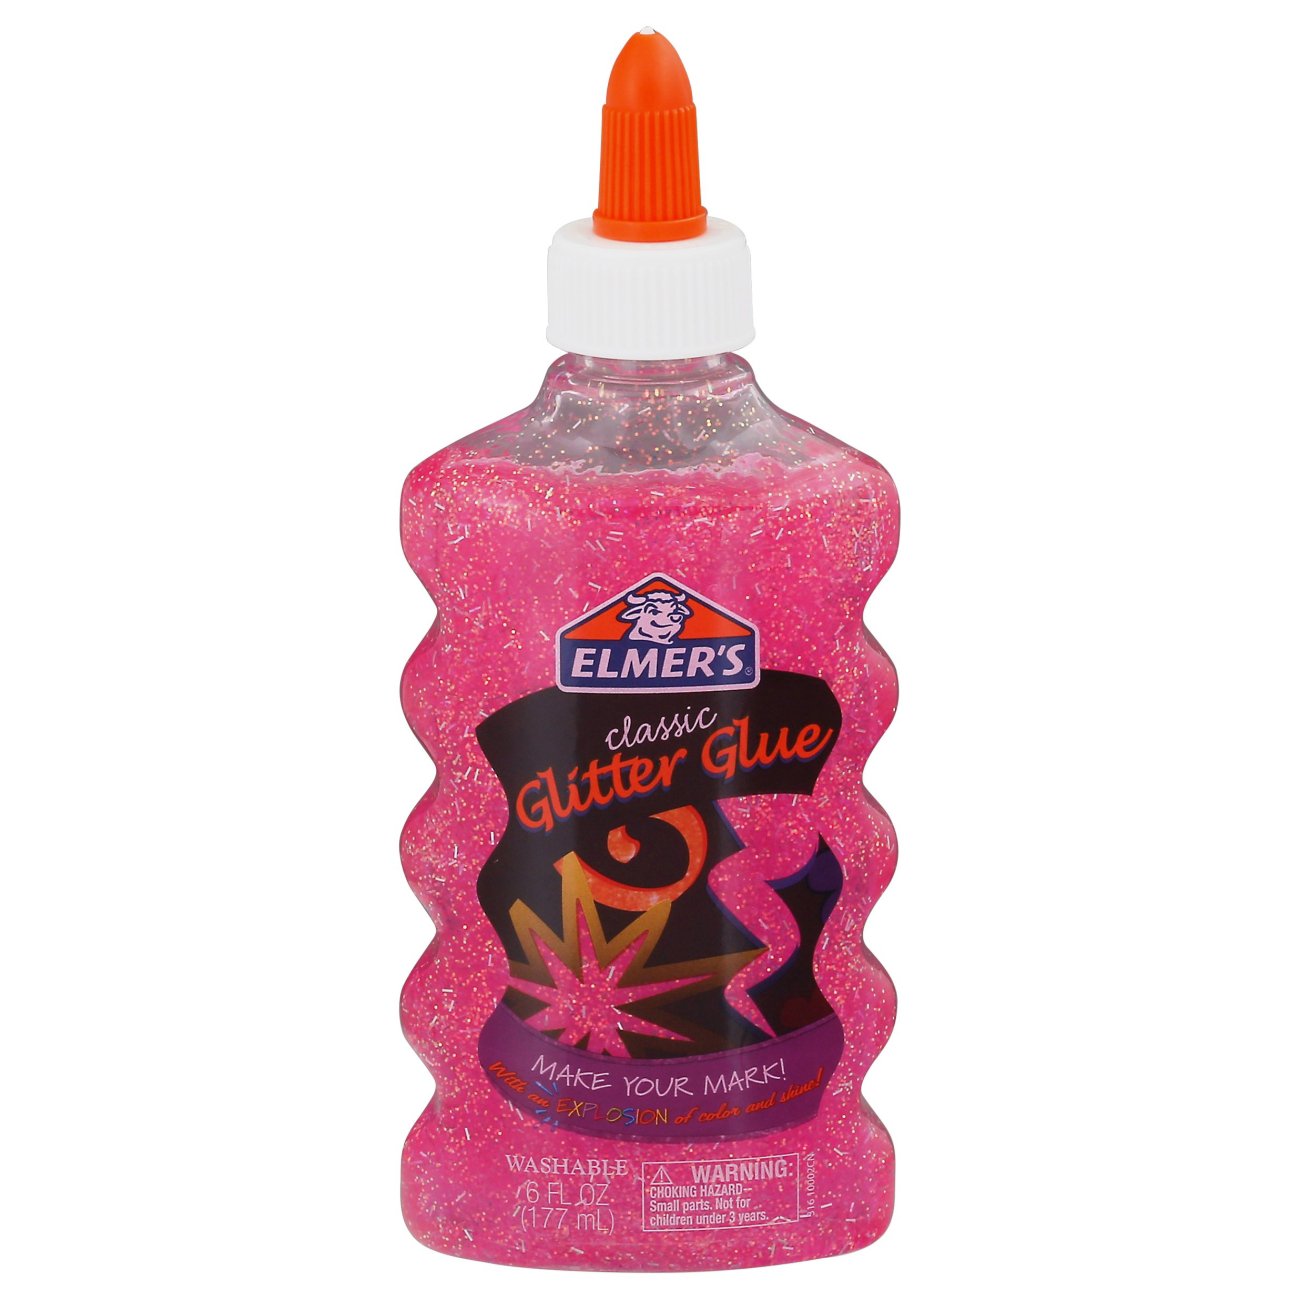 Elmer's Washable Glitter Glue, 6 oz Bottles, 3-Pack, Blue/Pink/Purple